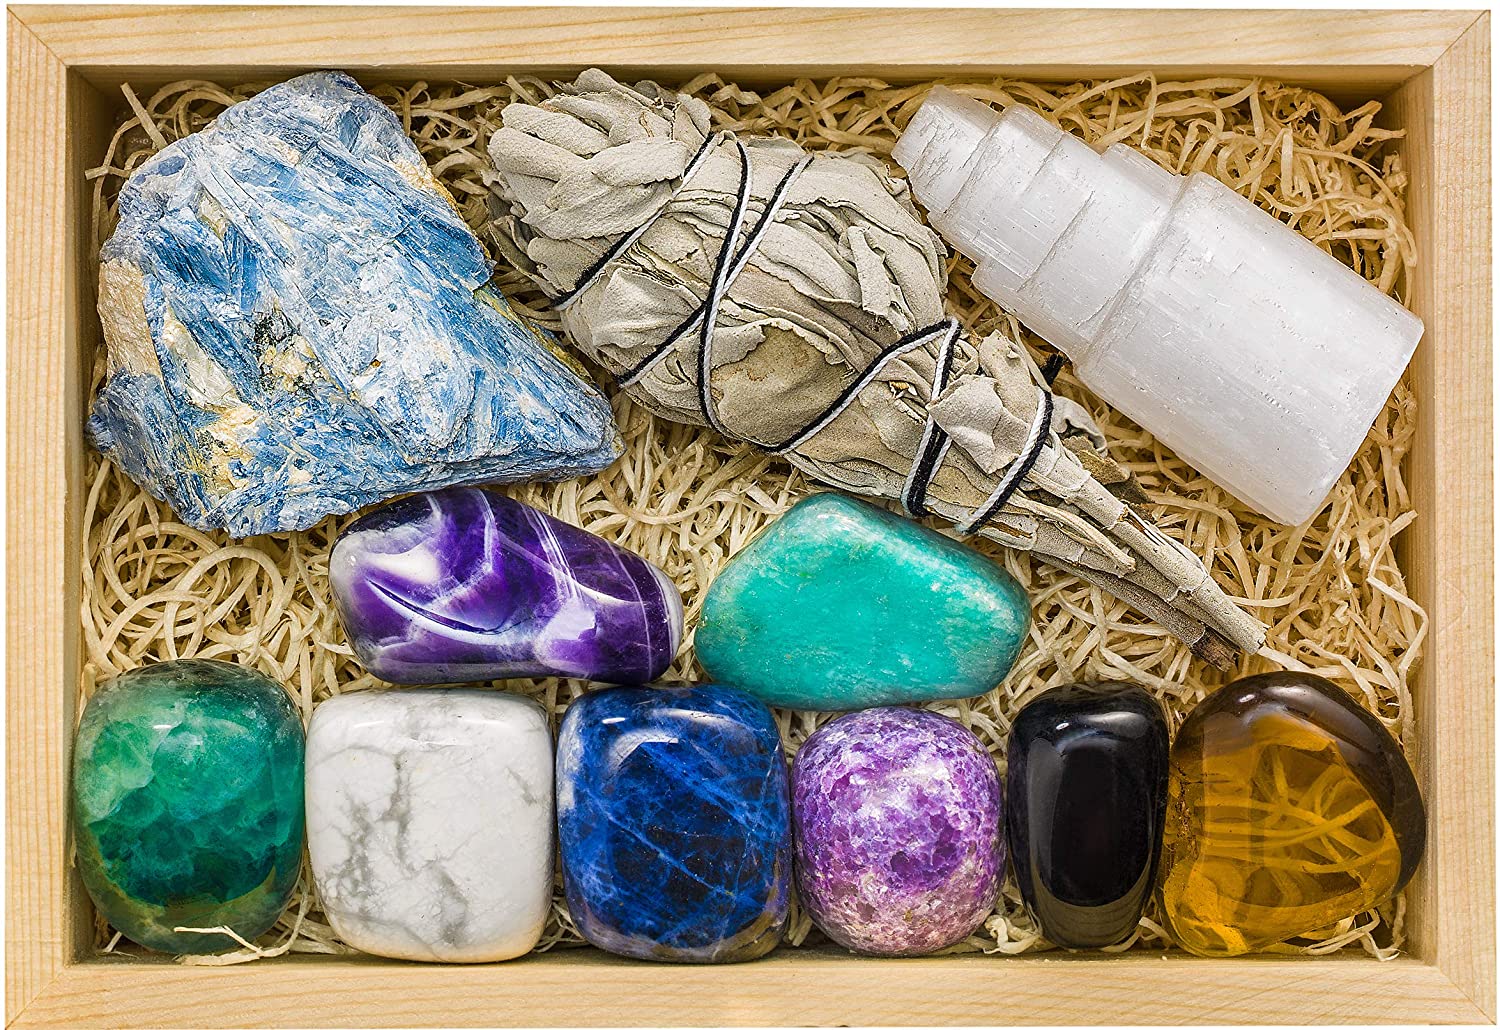 Crystalya Premium Grade Crystals and Healing Stones in Wooden Display Box